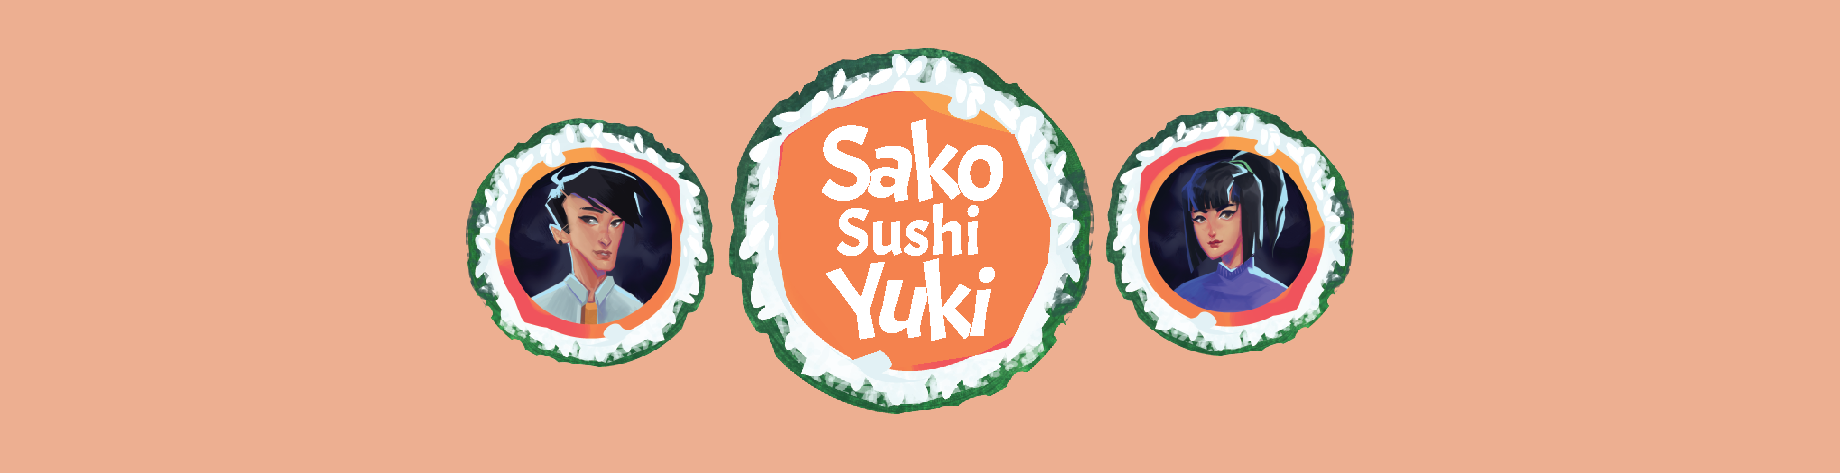 Sako Sushi Yuki